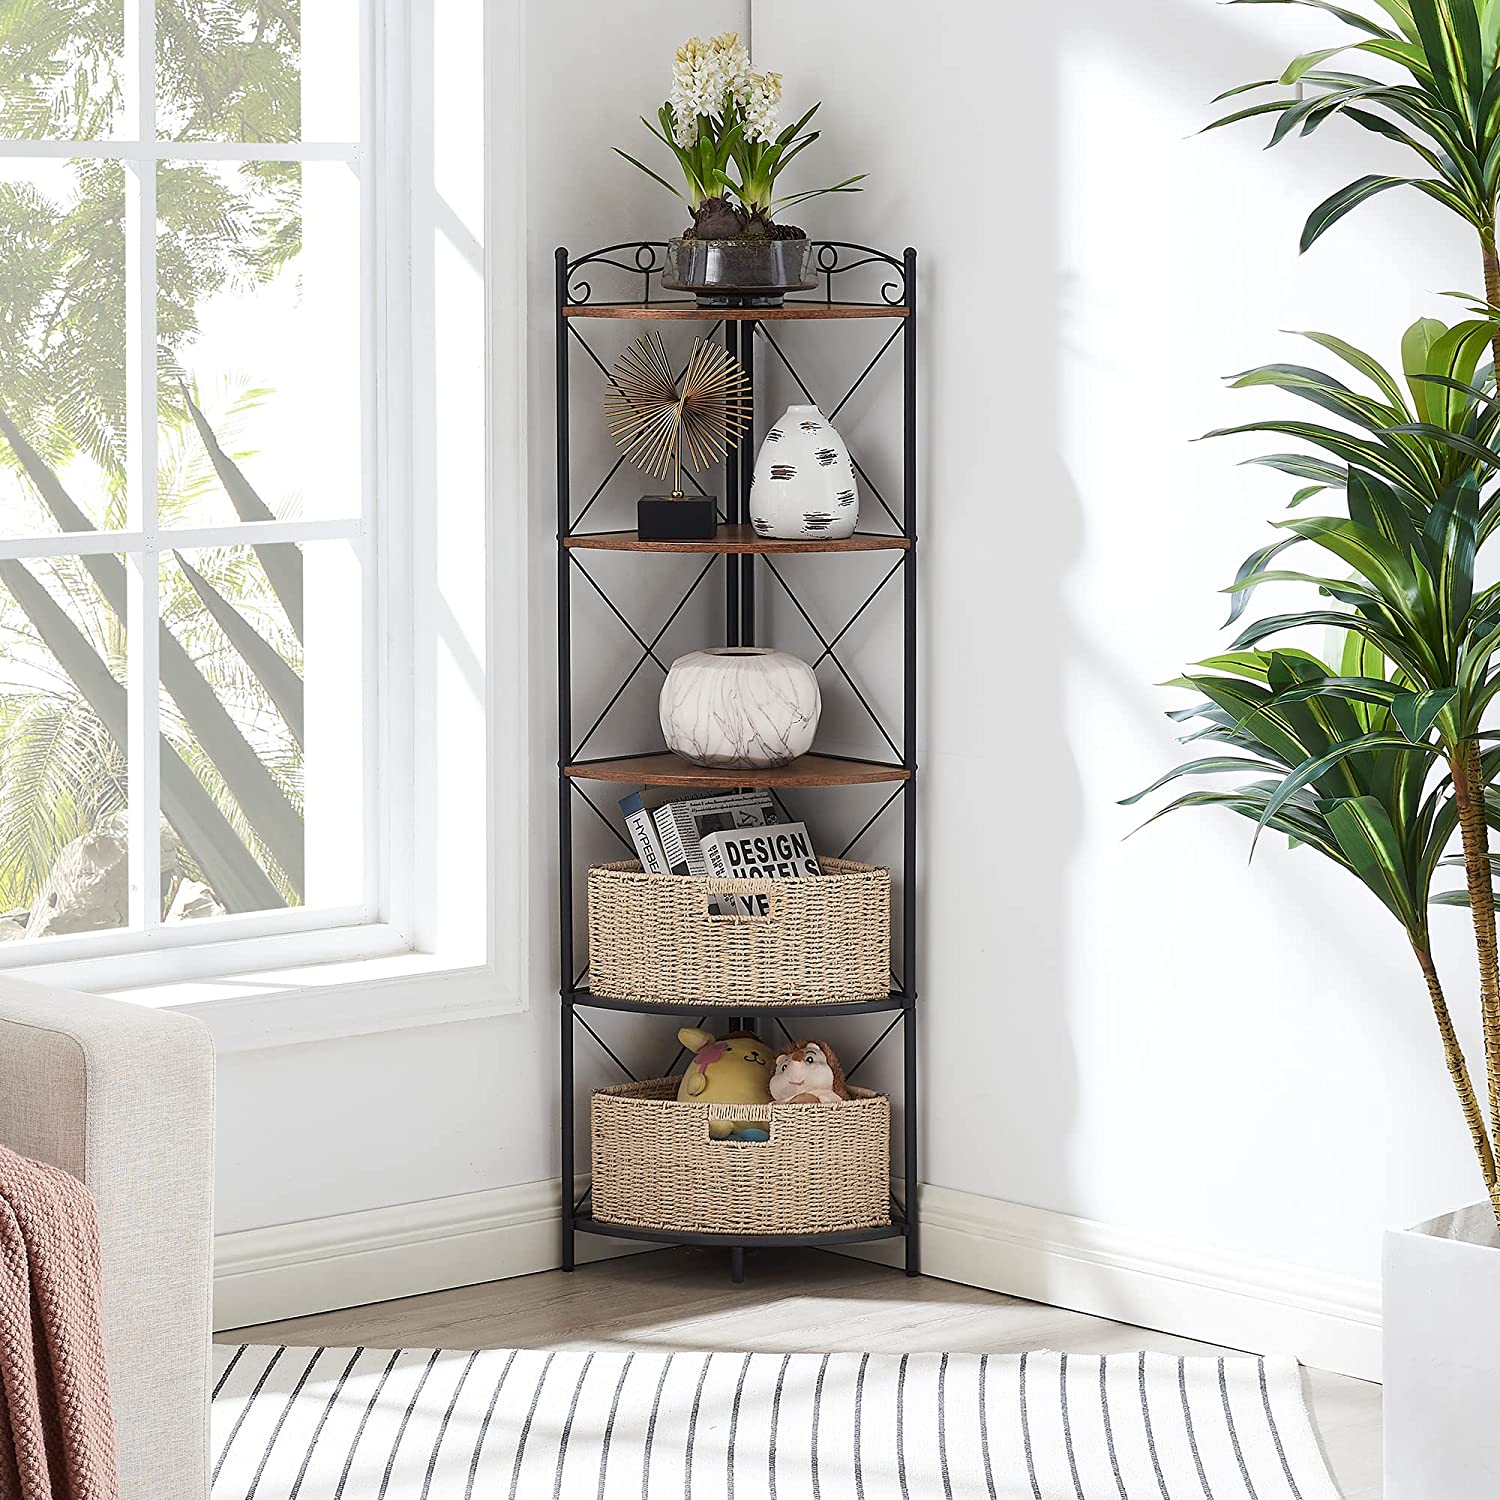 VECELO Corner Storage Cabinet with Wooden Shelves Free-Standing Organizer